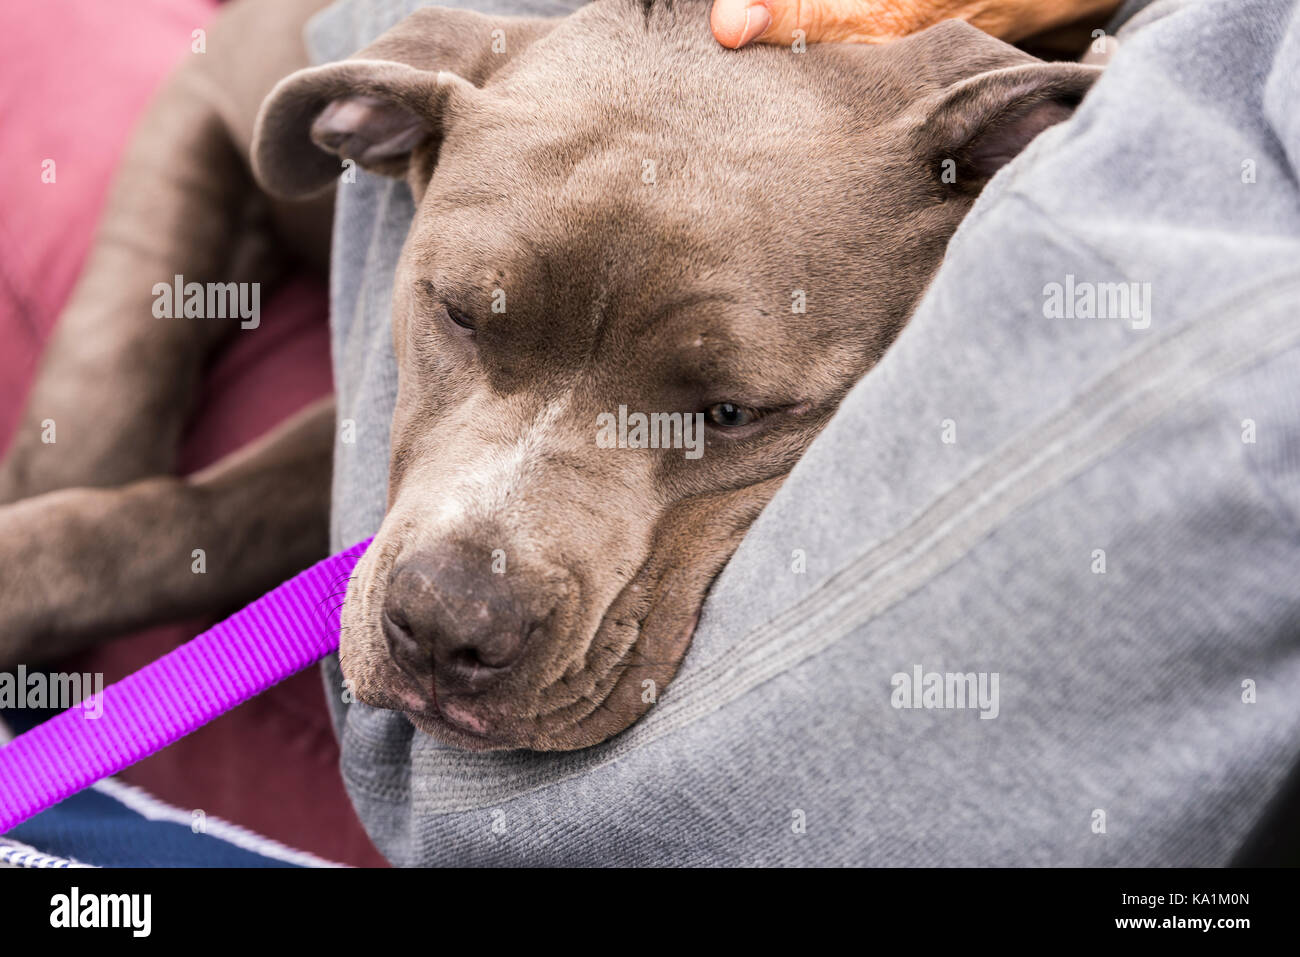 Hund Blue Nose Pit entspannt Personen arm Stockfotografie - Alamy